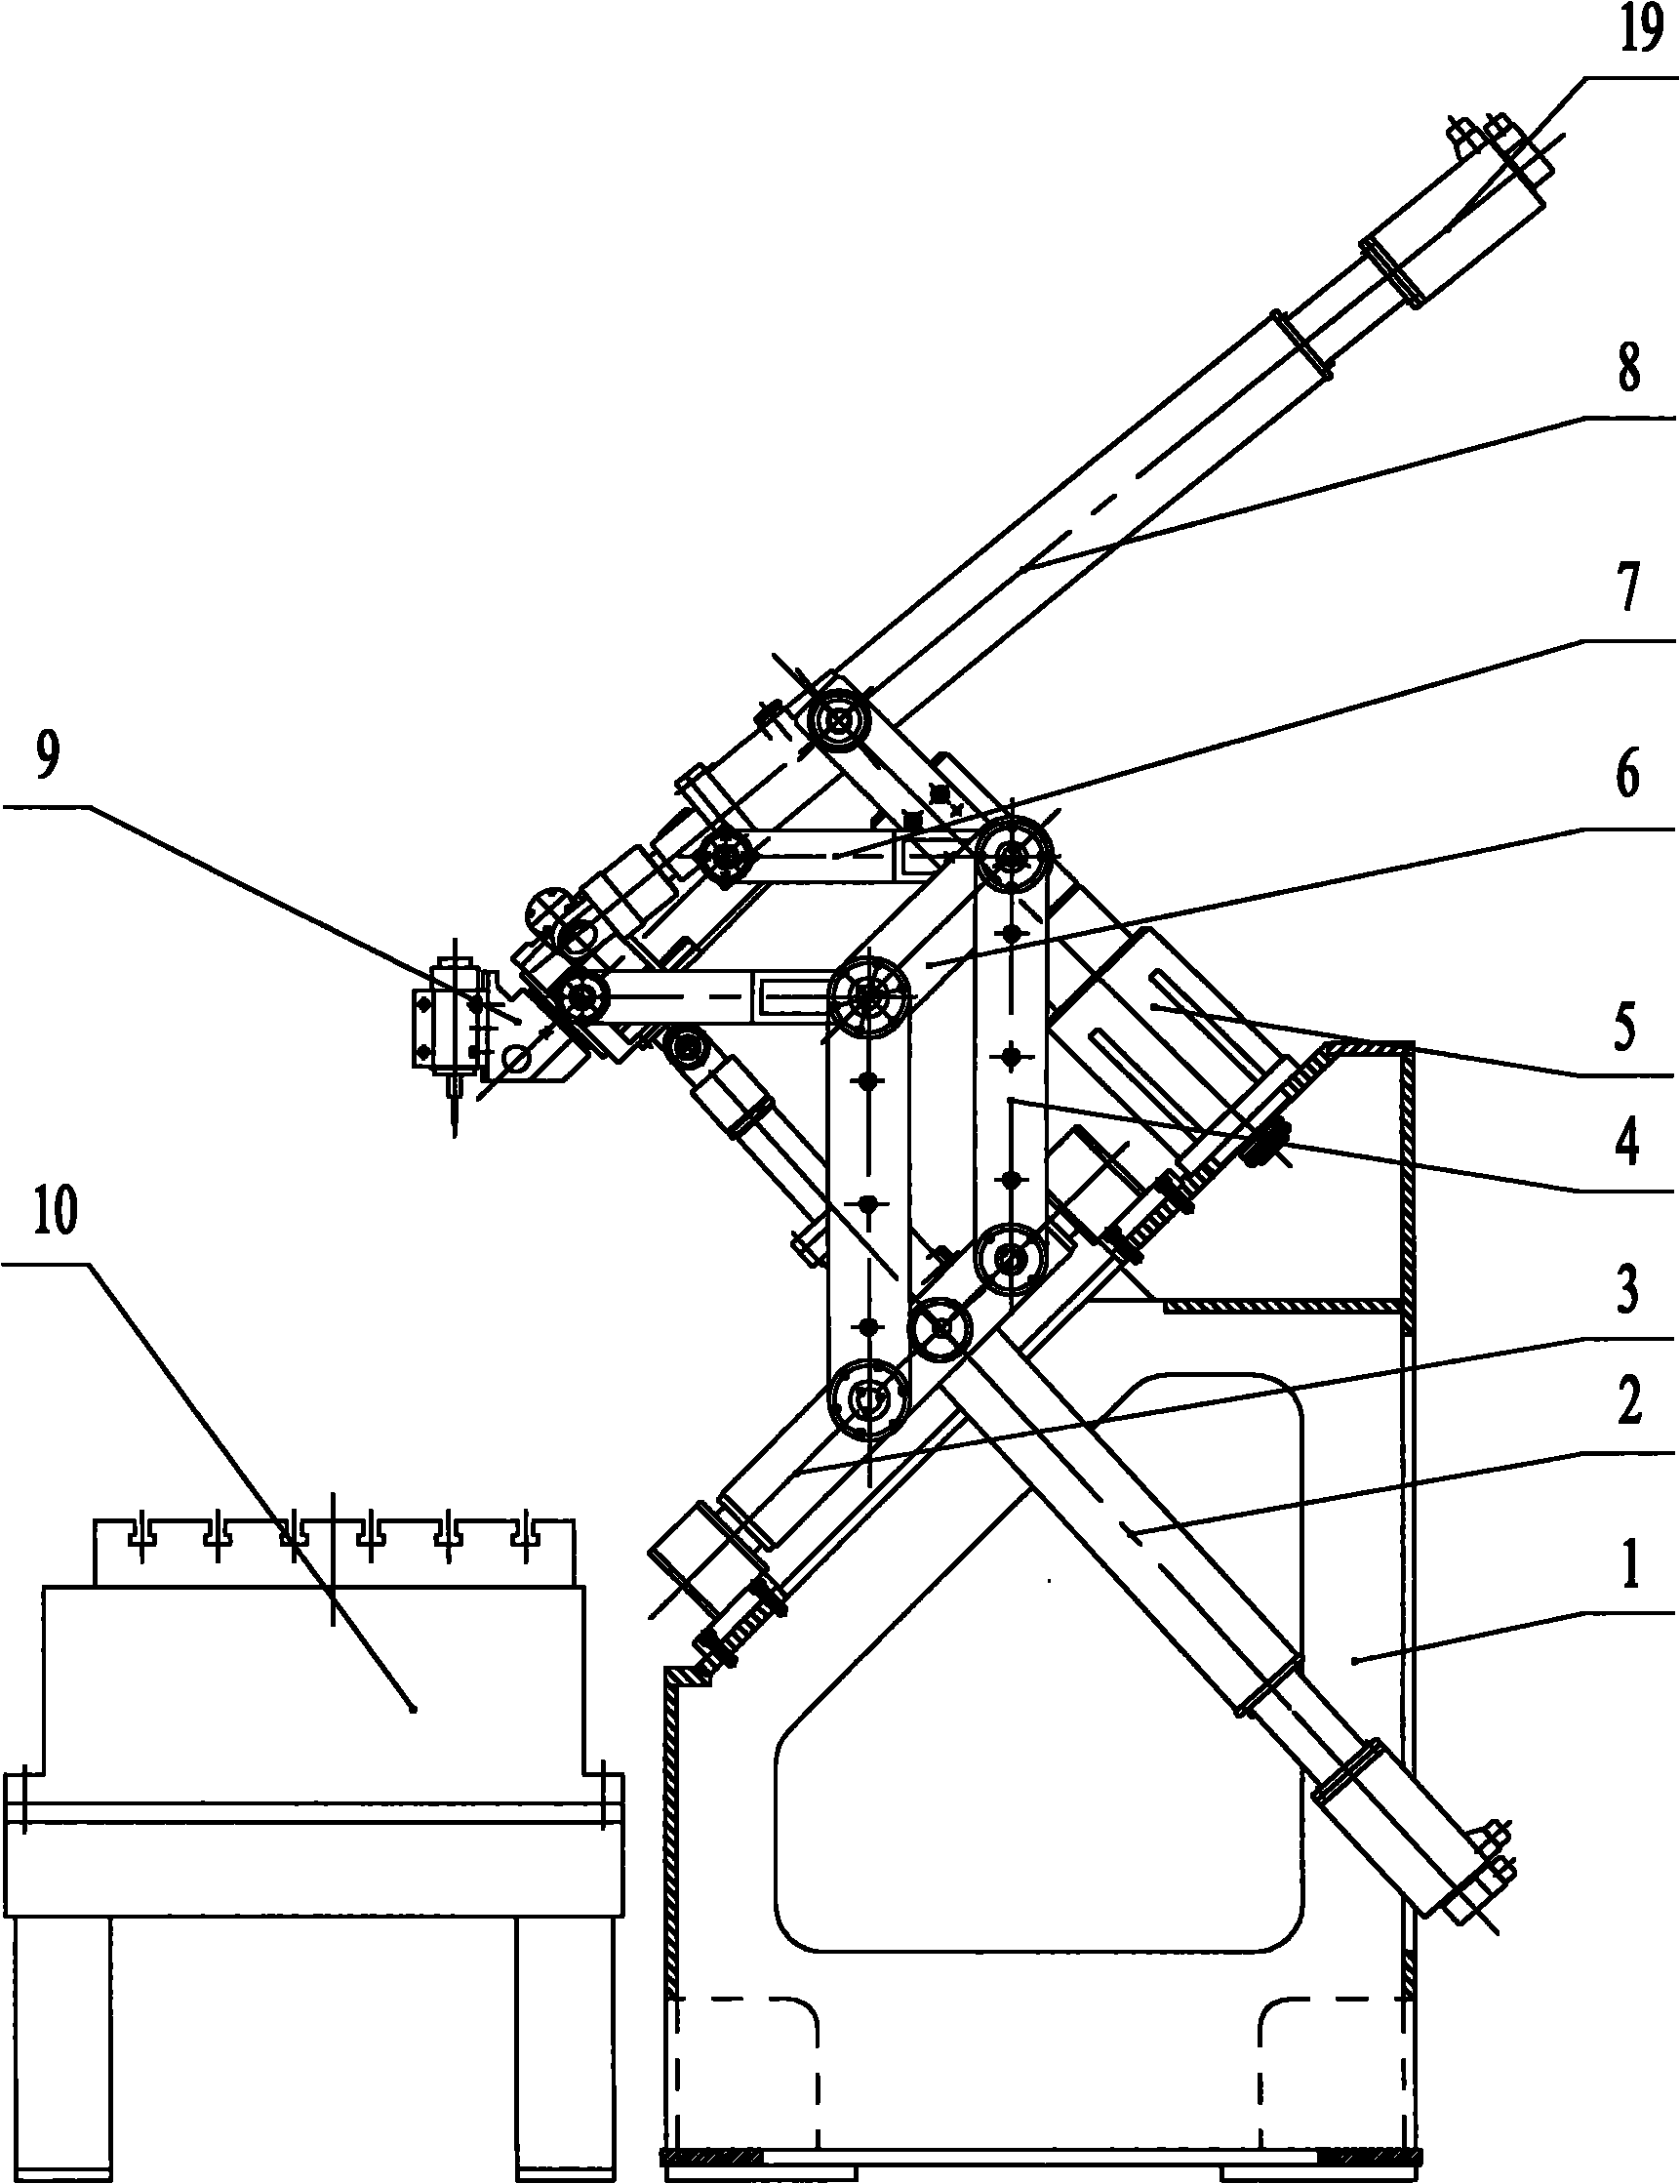 Three-chain parallel machine tool